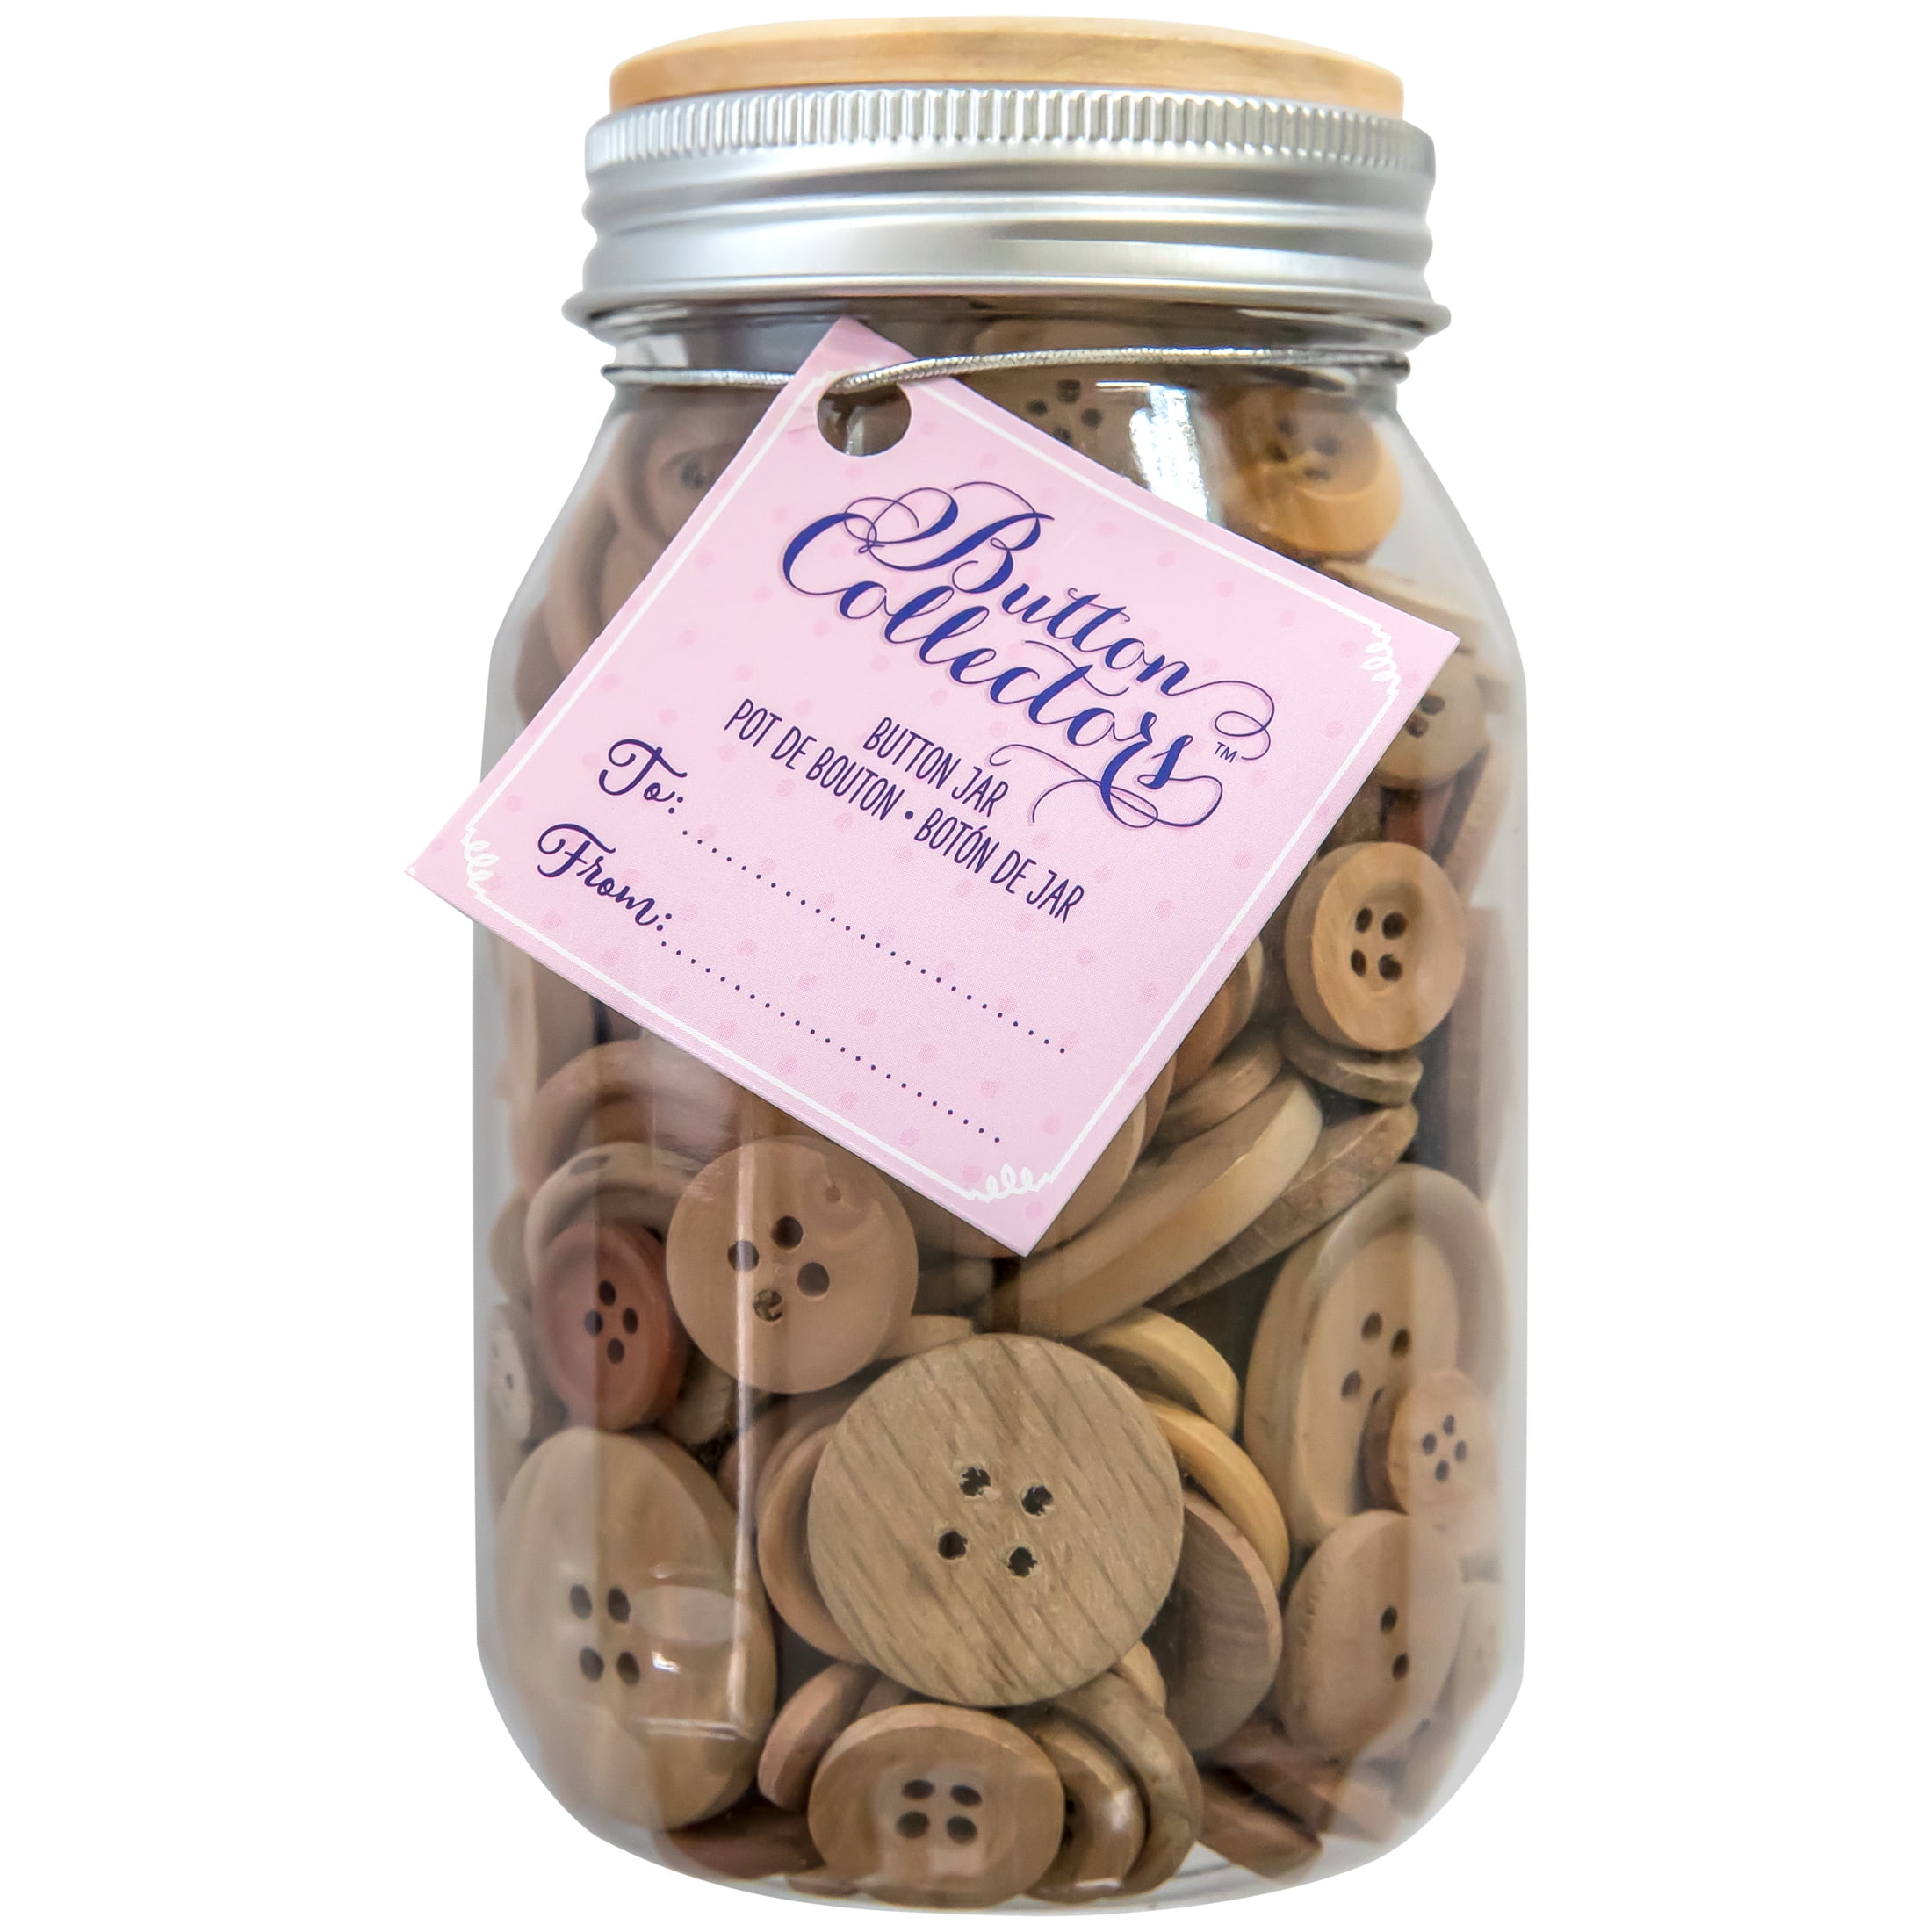 Button Collector's Multicolor Wood Assorted Mix Button Jar, 61/2 Ounces